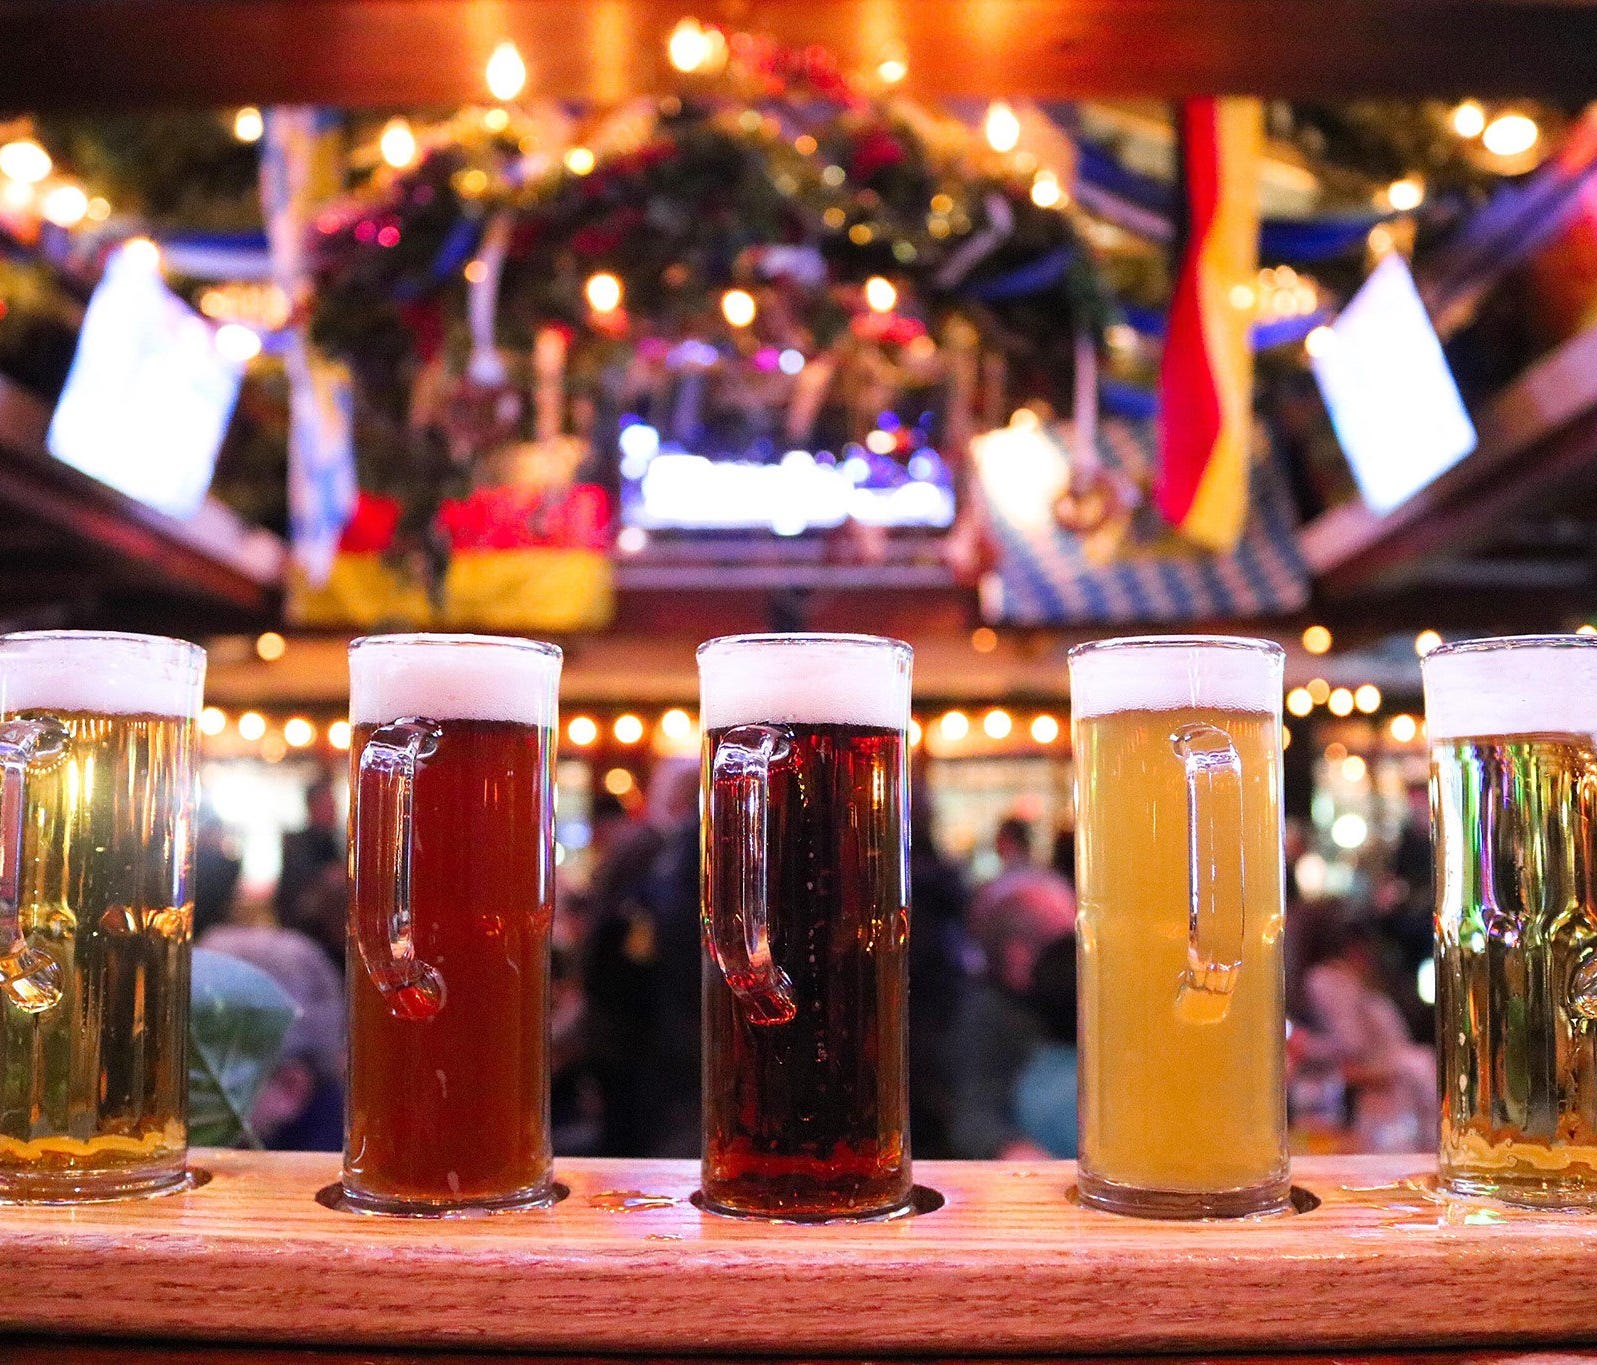 Bierhaus imports Hofbräu beer from the brewery in Munich, including lager, dunkel, hefe weizen, and seasonals like Oktoberfest.